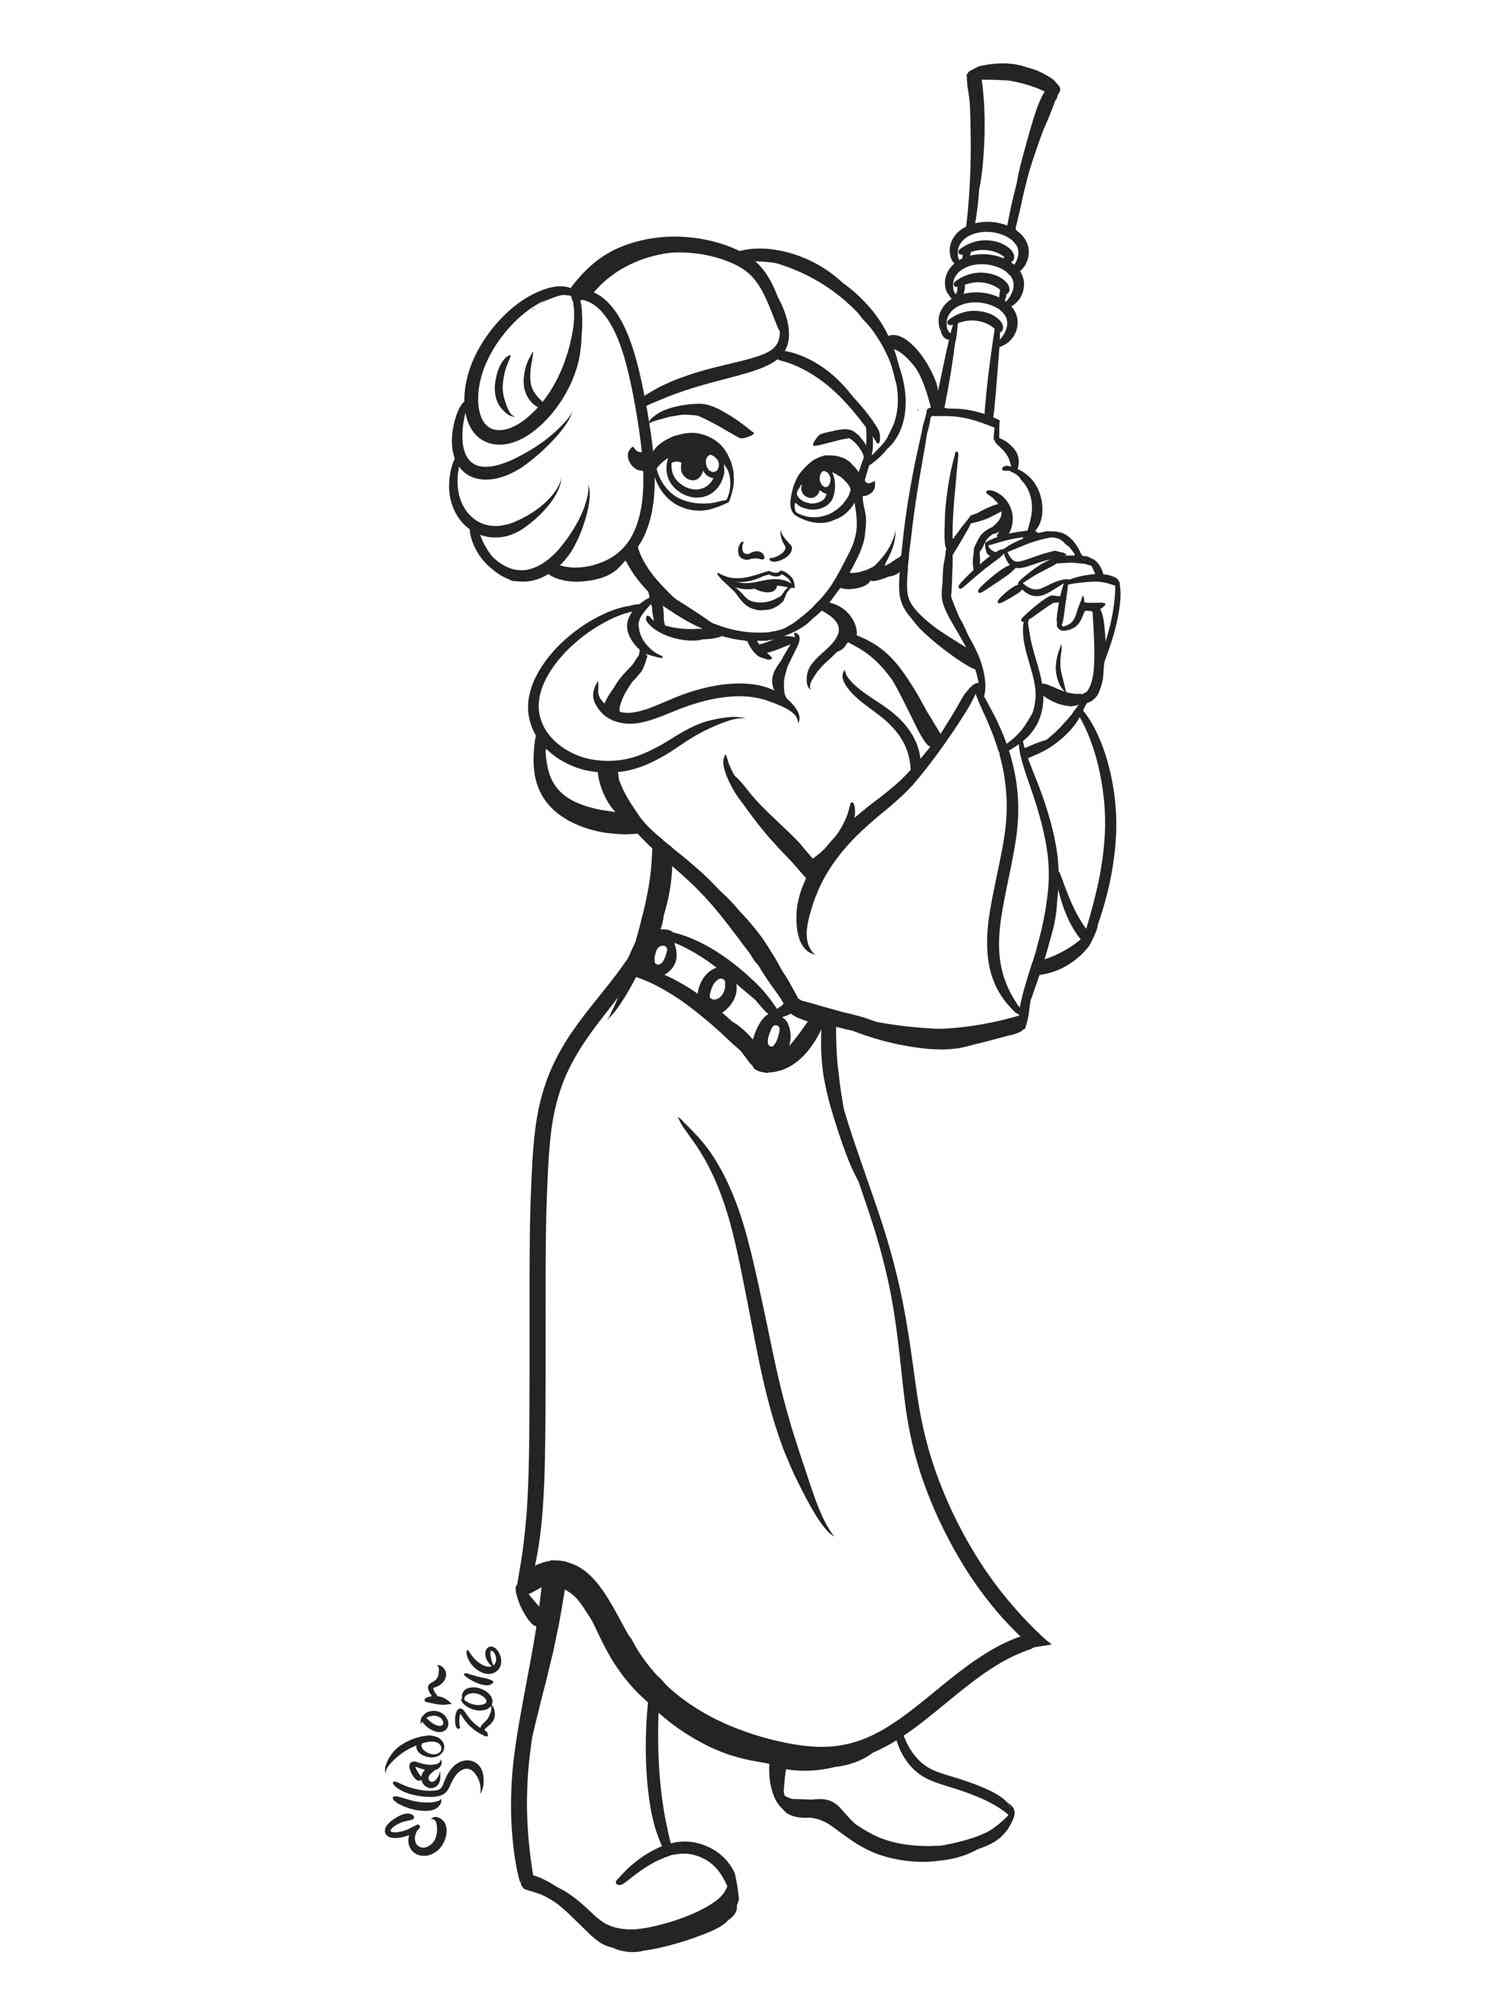 Princess Leia coloring page - Free printable